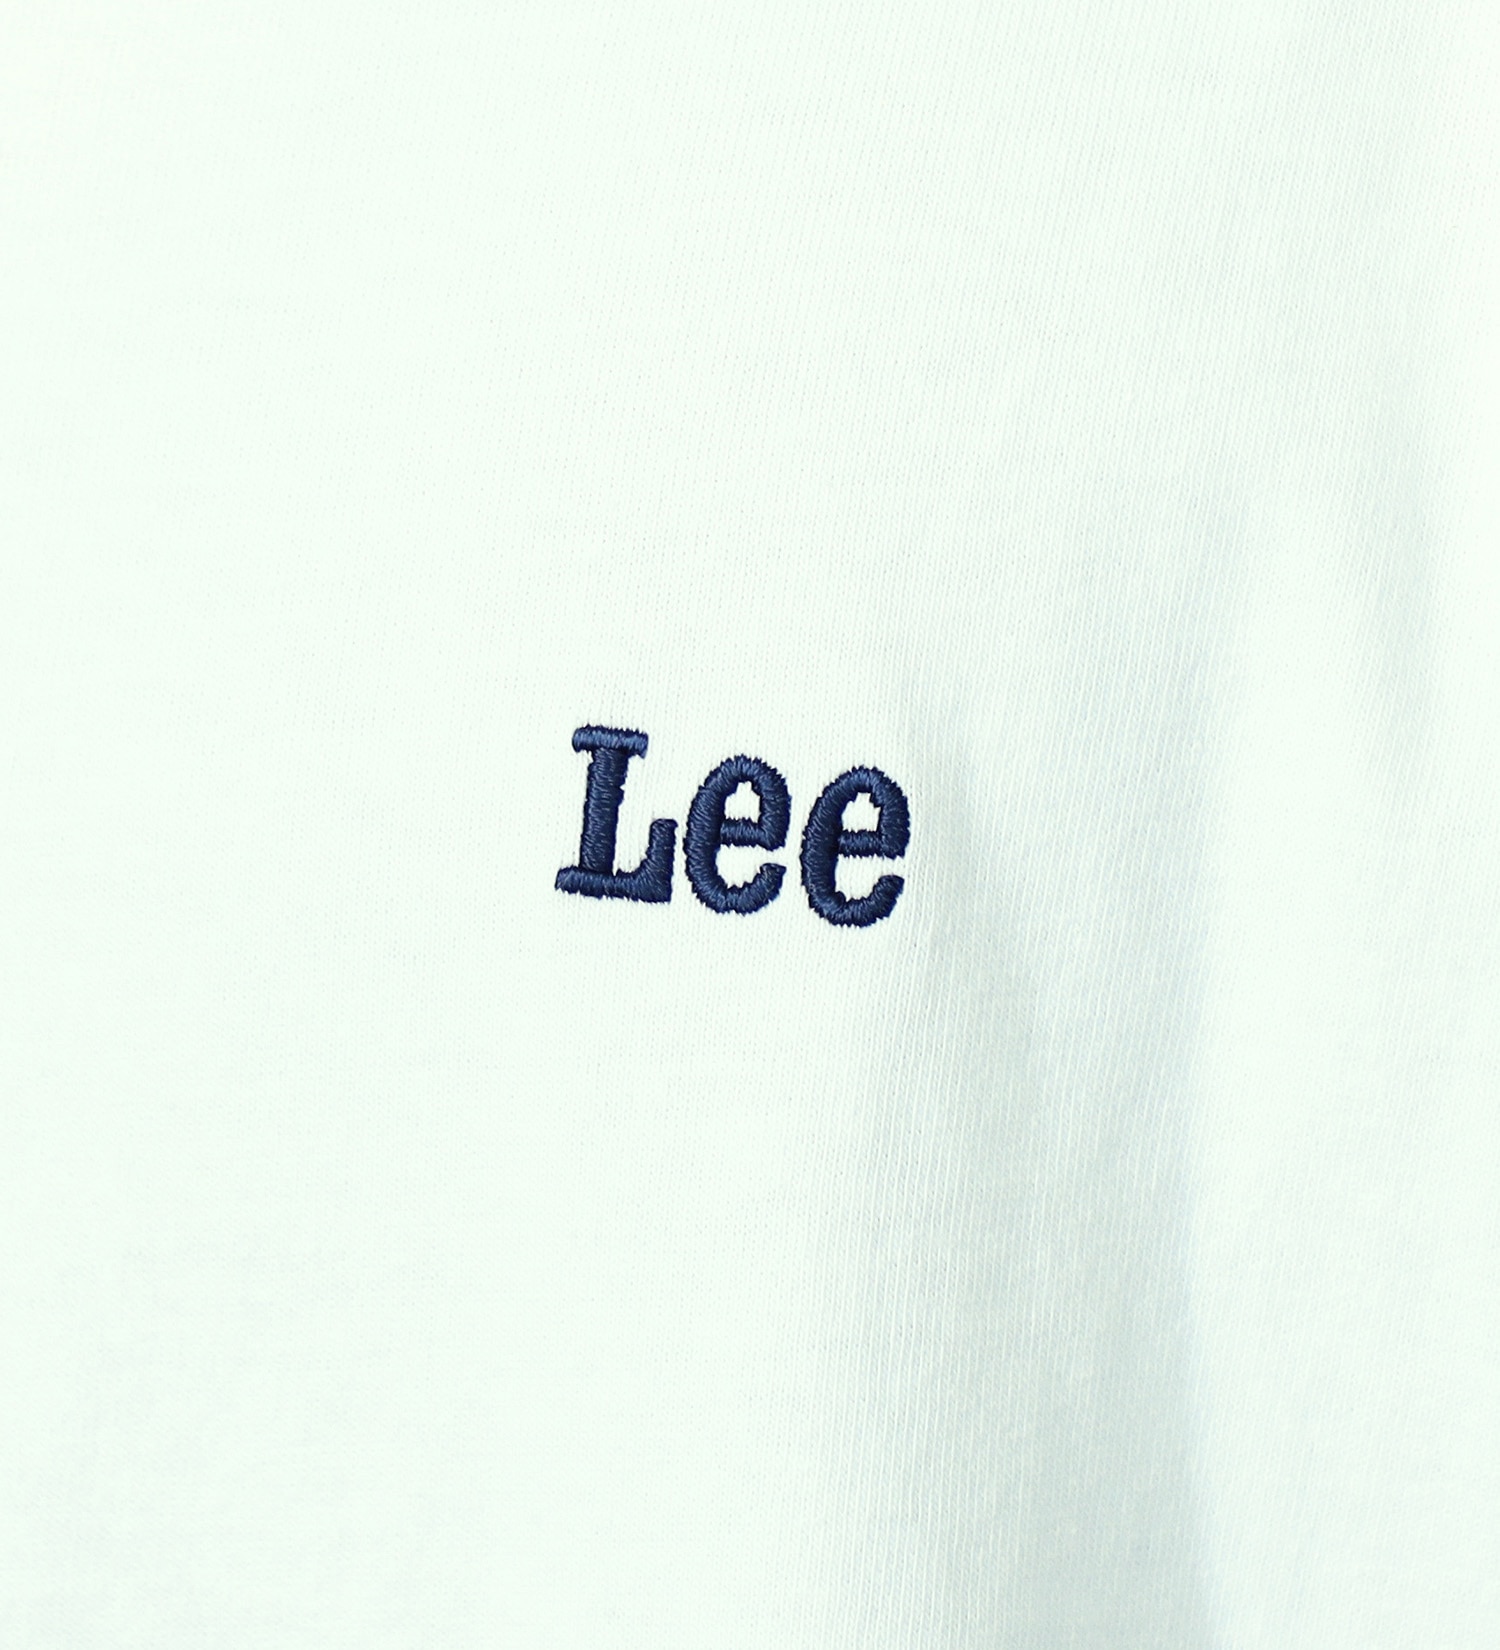 Lee(リー)の【GW SALE】バックプリント オールドアド ネオン ショートスリーブTee|トップス/Tシャツ/カットソー/メンズ|ホワイト2